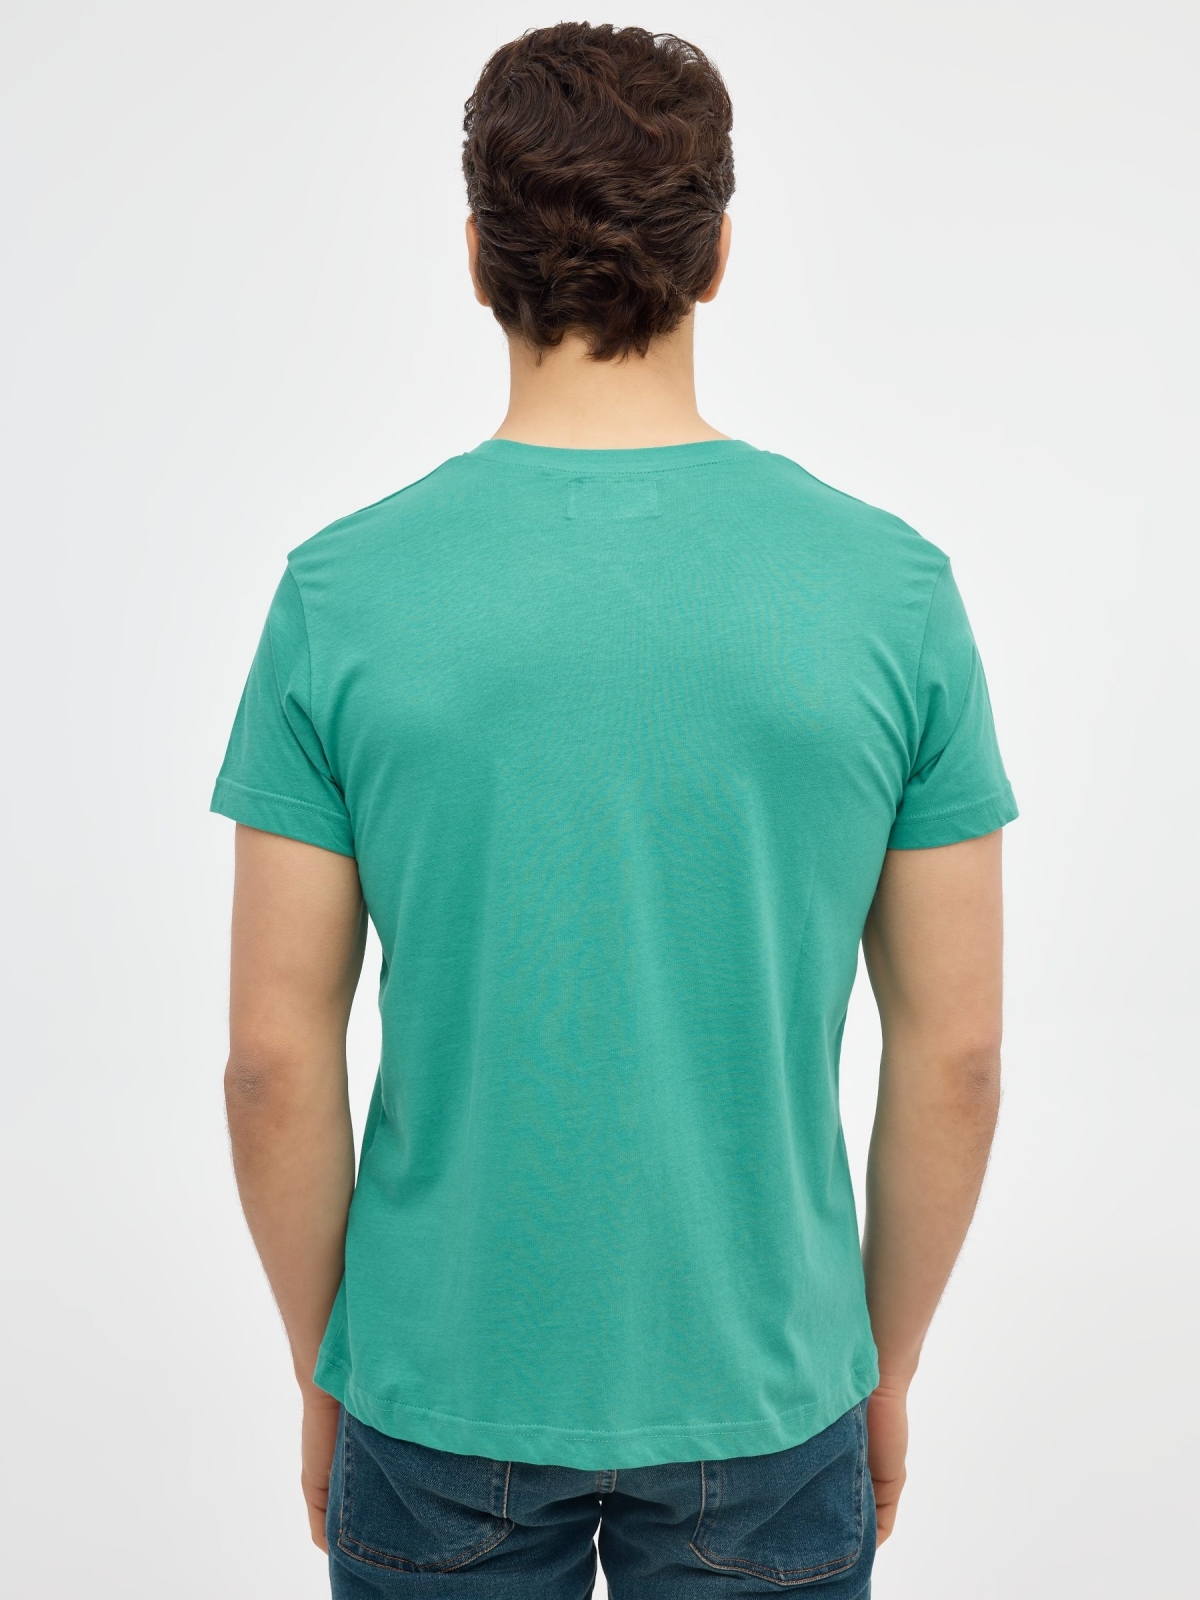 Camiseta básica manga corta verde agua vista media trasera